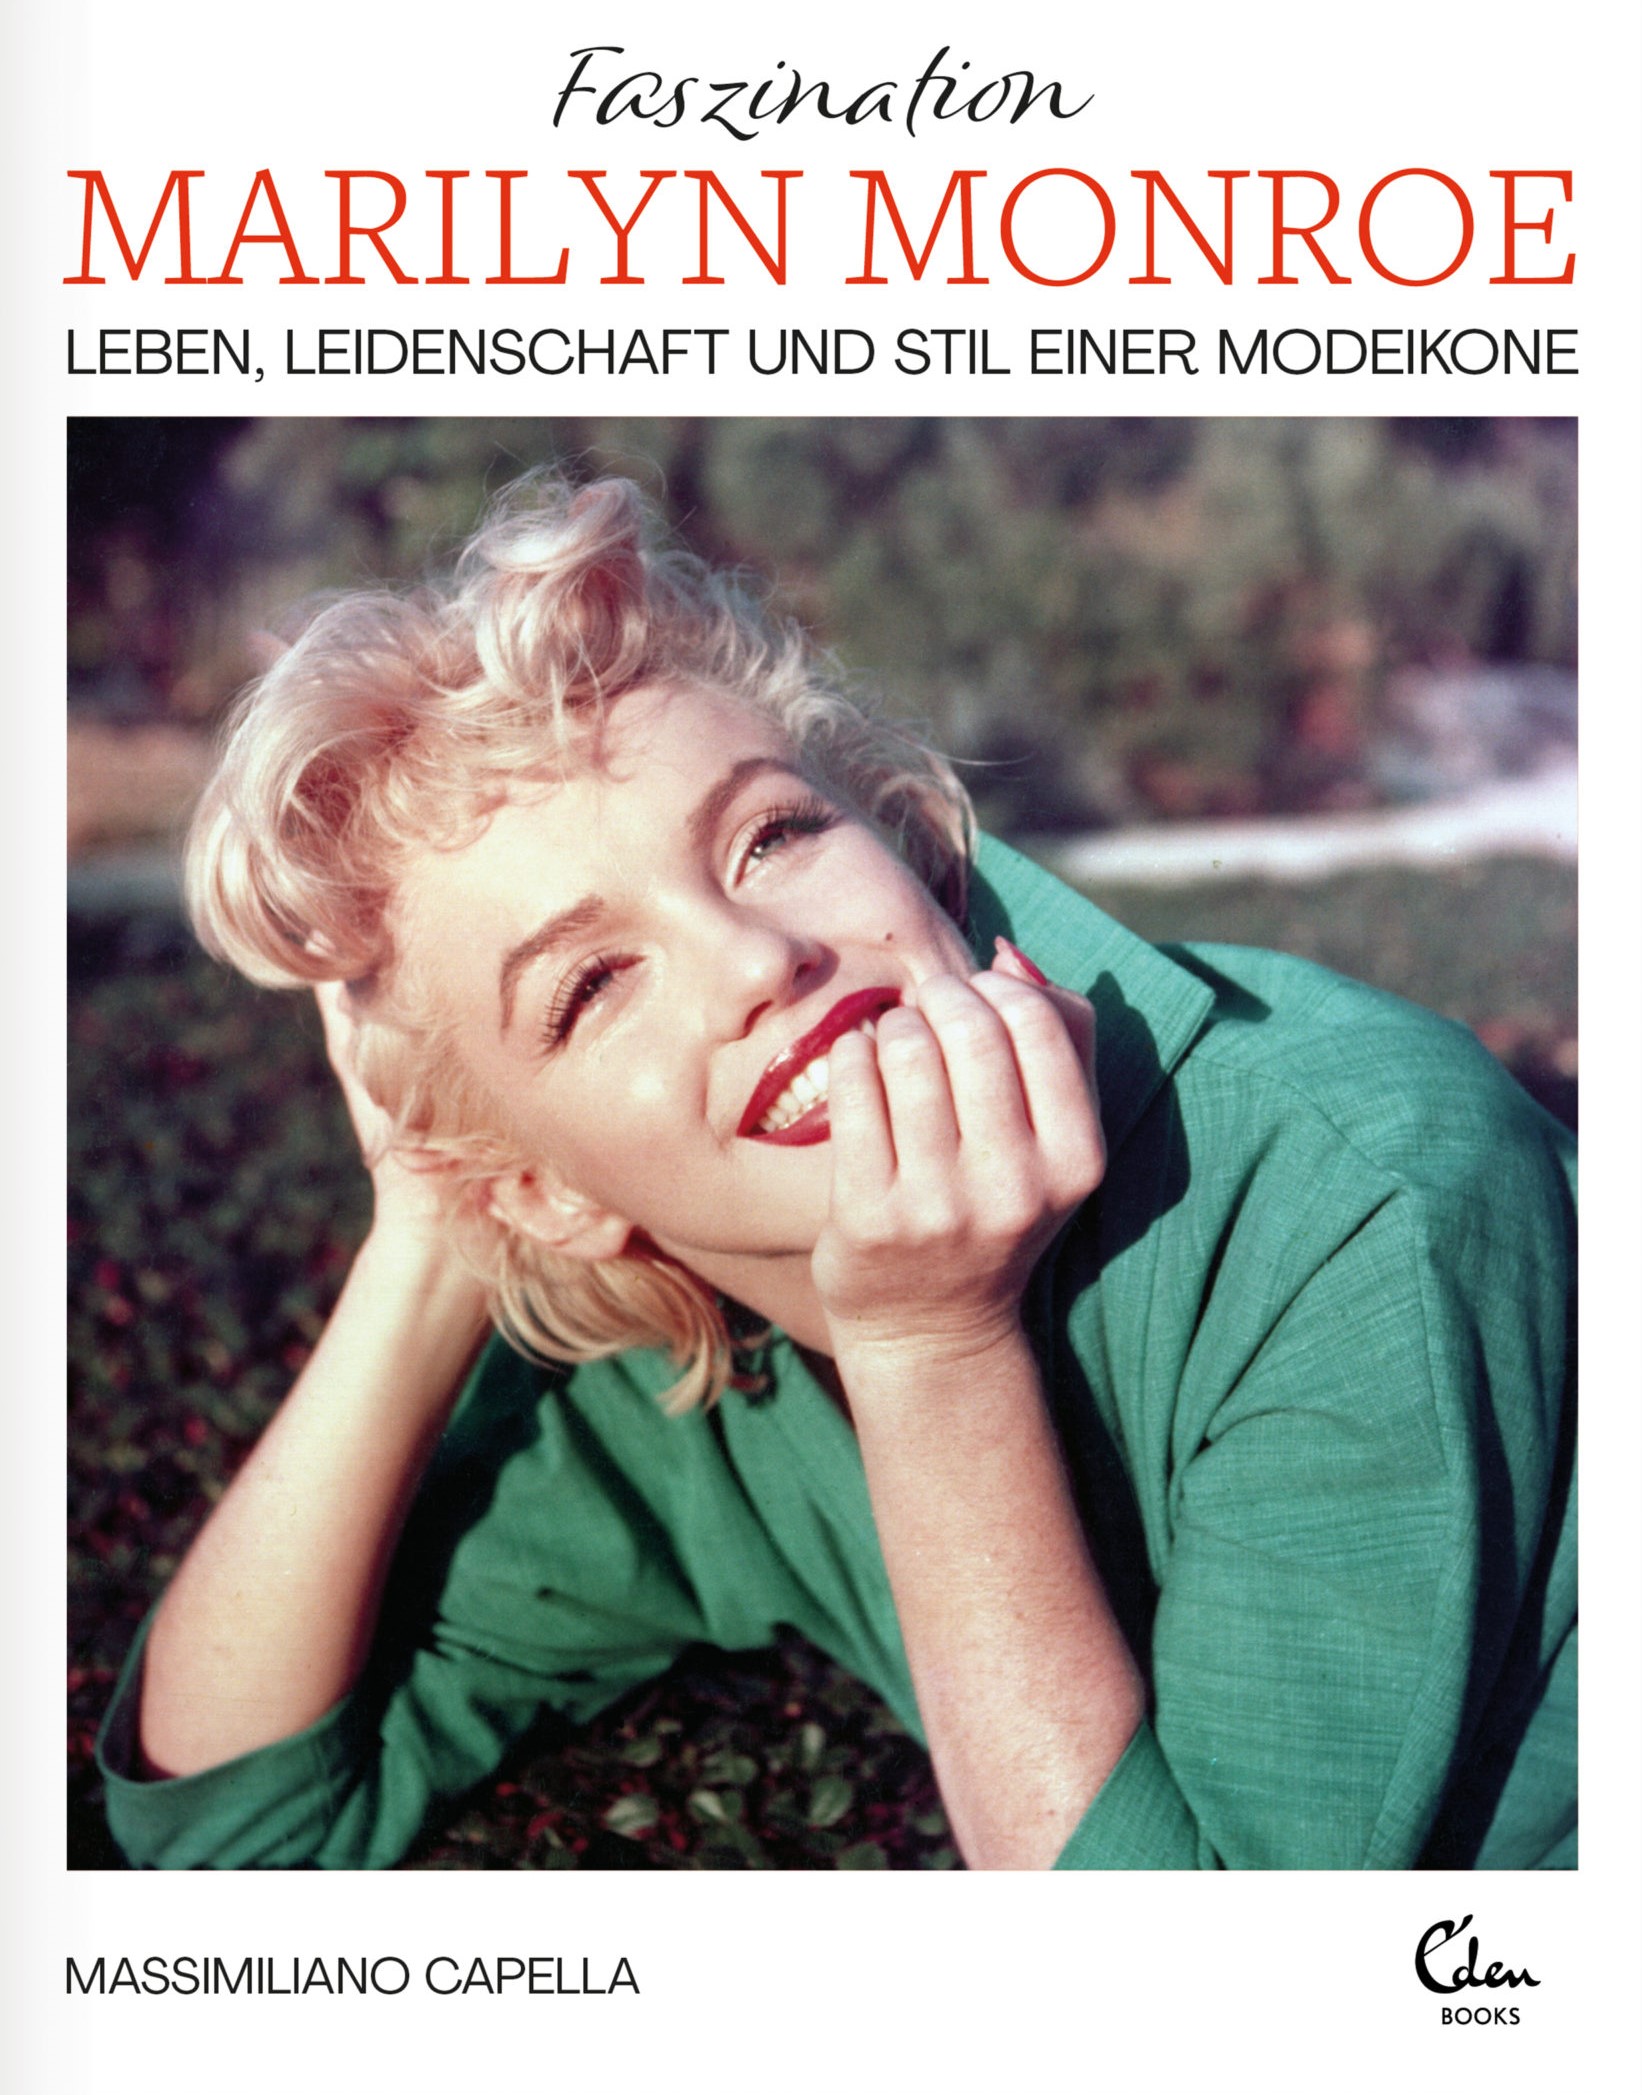 Massimiliano Capella: Faszination Marilyn Monroe